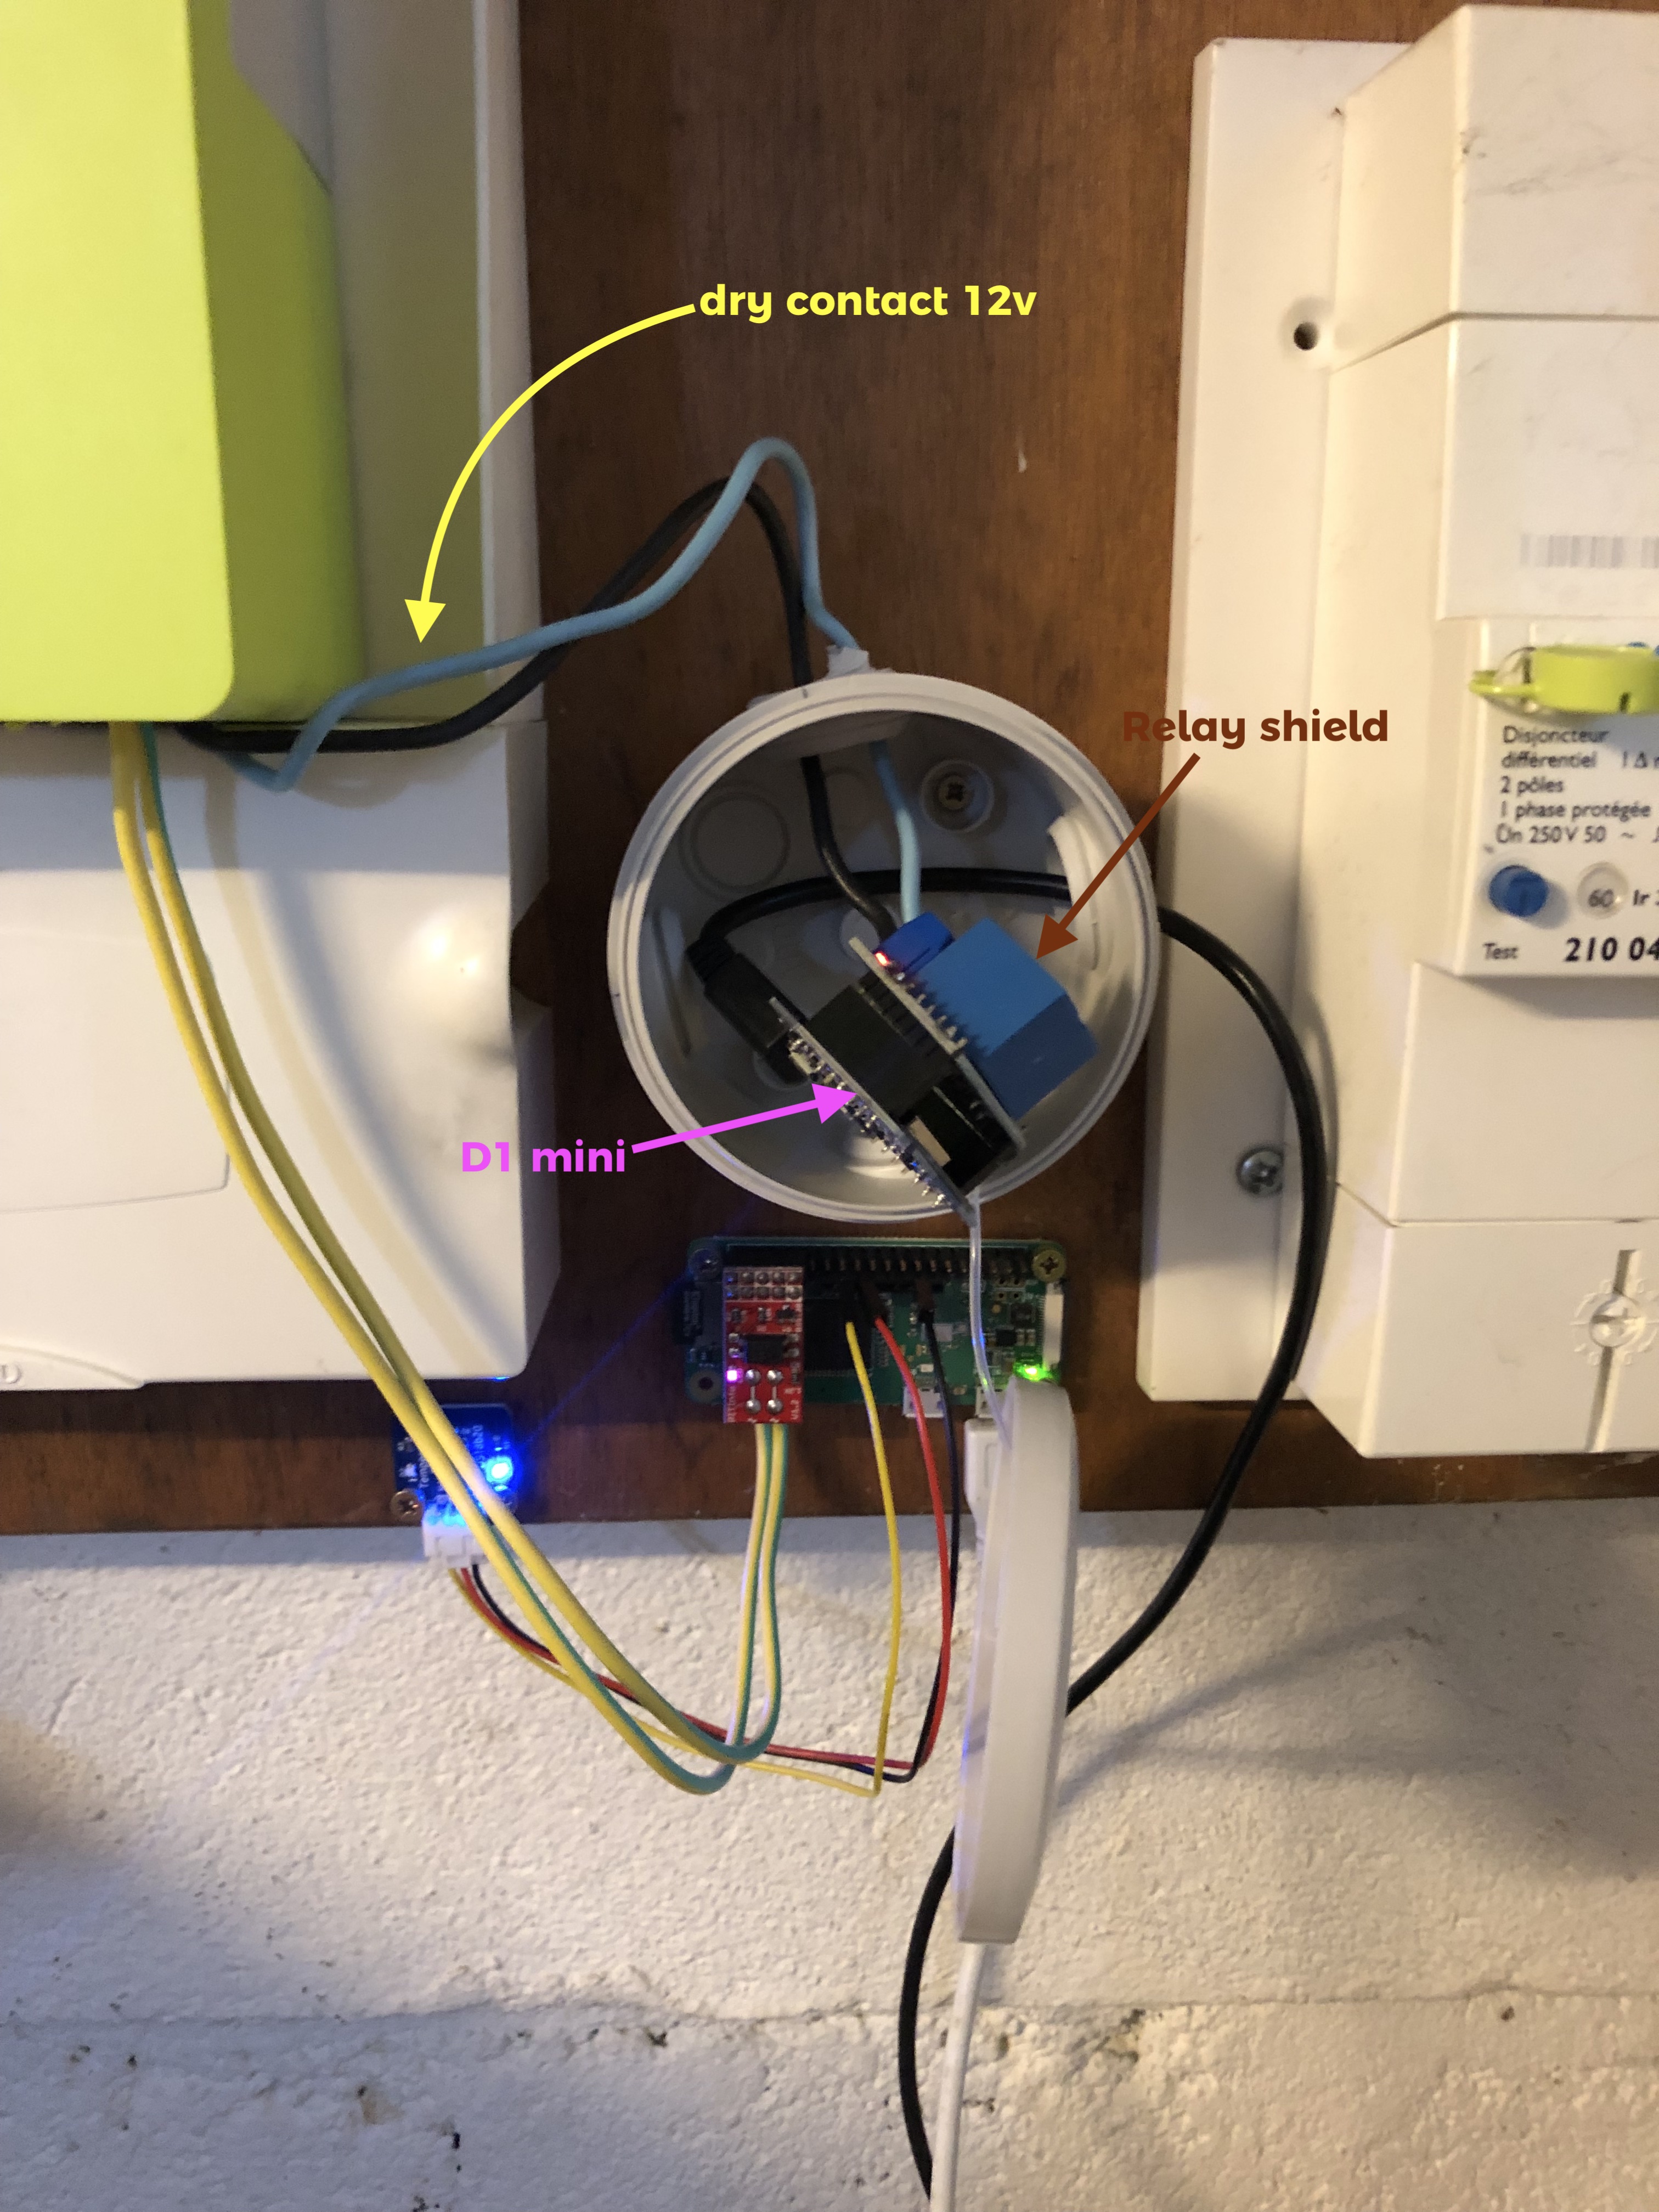 D1 mini + relay - plugged